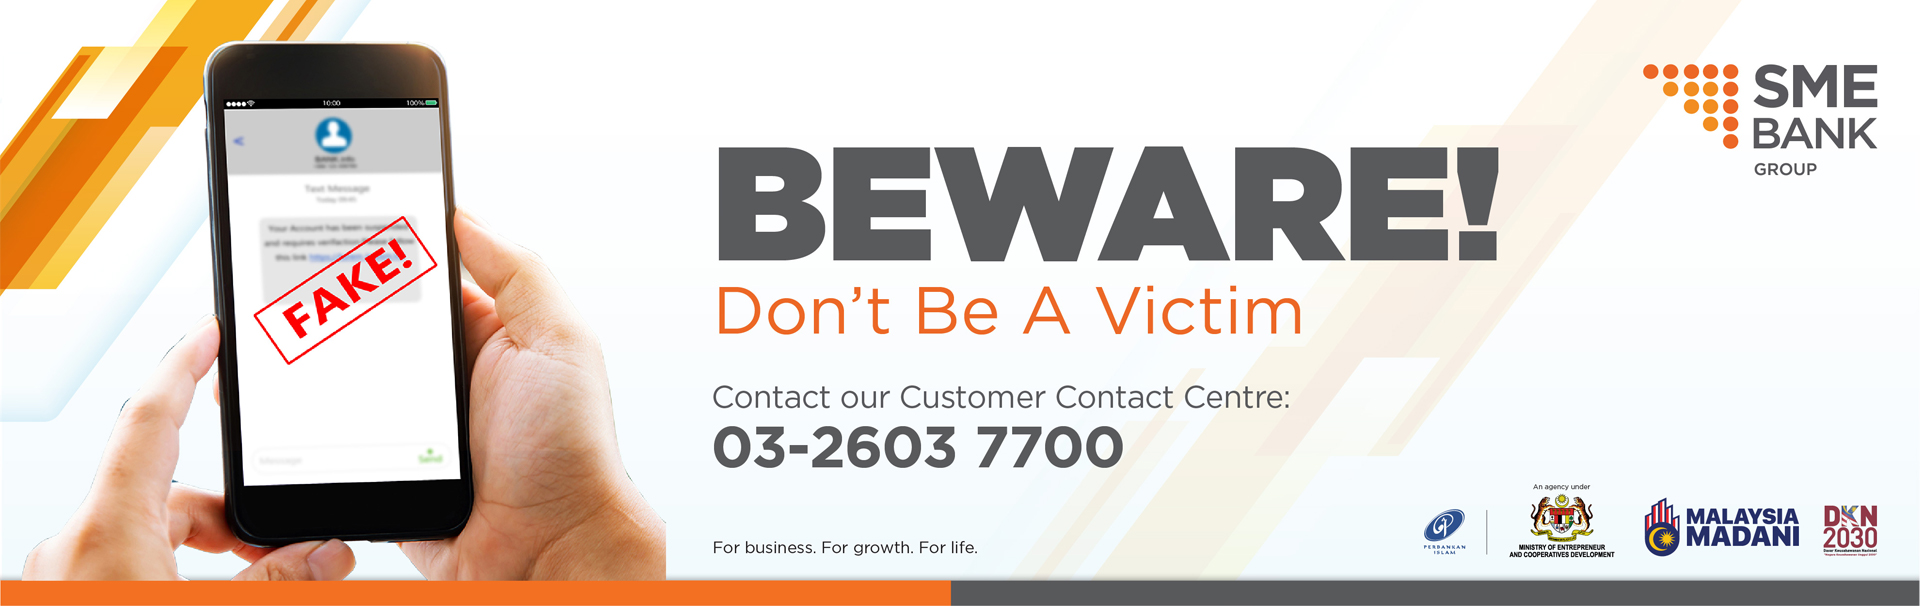 SME Bank | Beware ! Don't Be A Victim